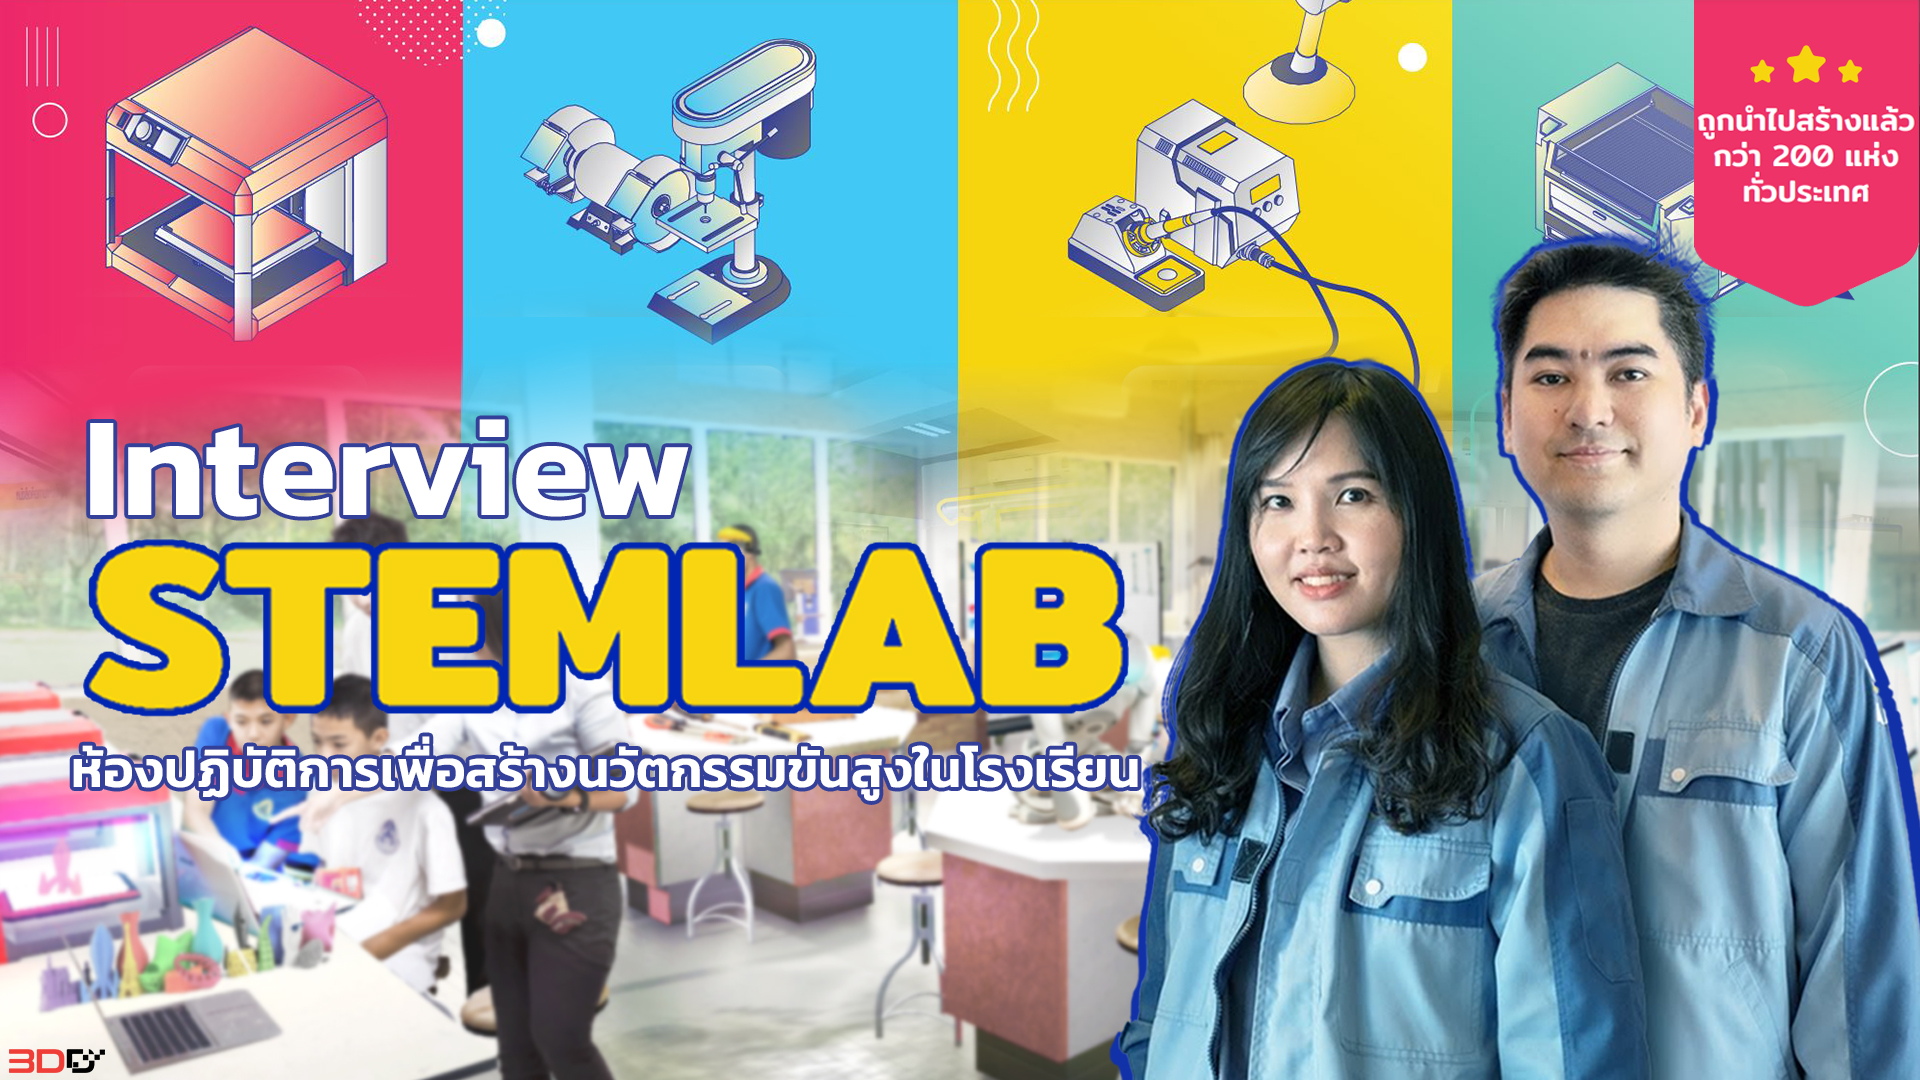 Stemlab ห้องแล็ปนวัตกรรมขั้นสูง 200 โรงเรียนทั่วไทย ดาวเทียมก็ทำ หุ่นยนต์ก็มี